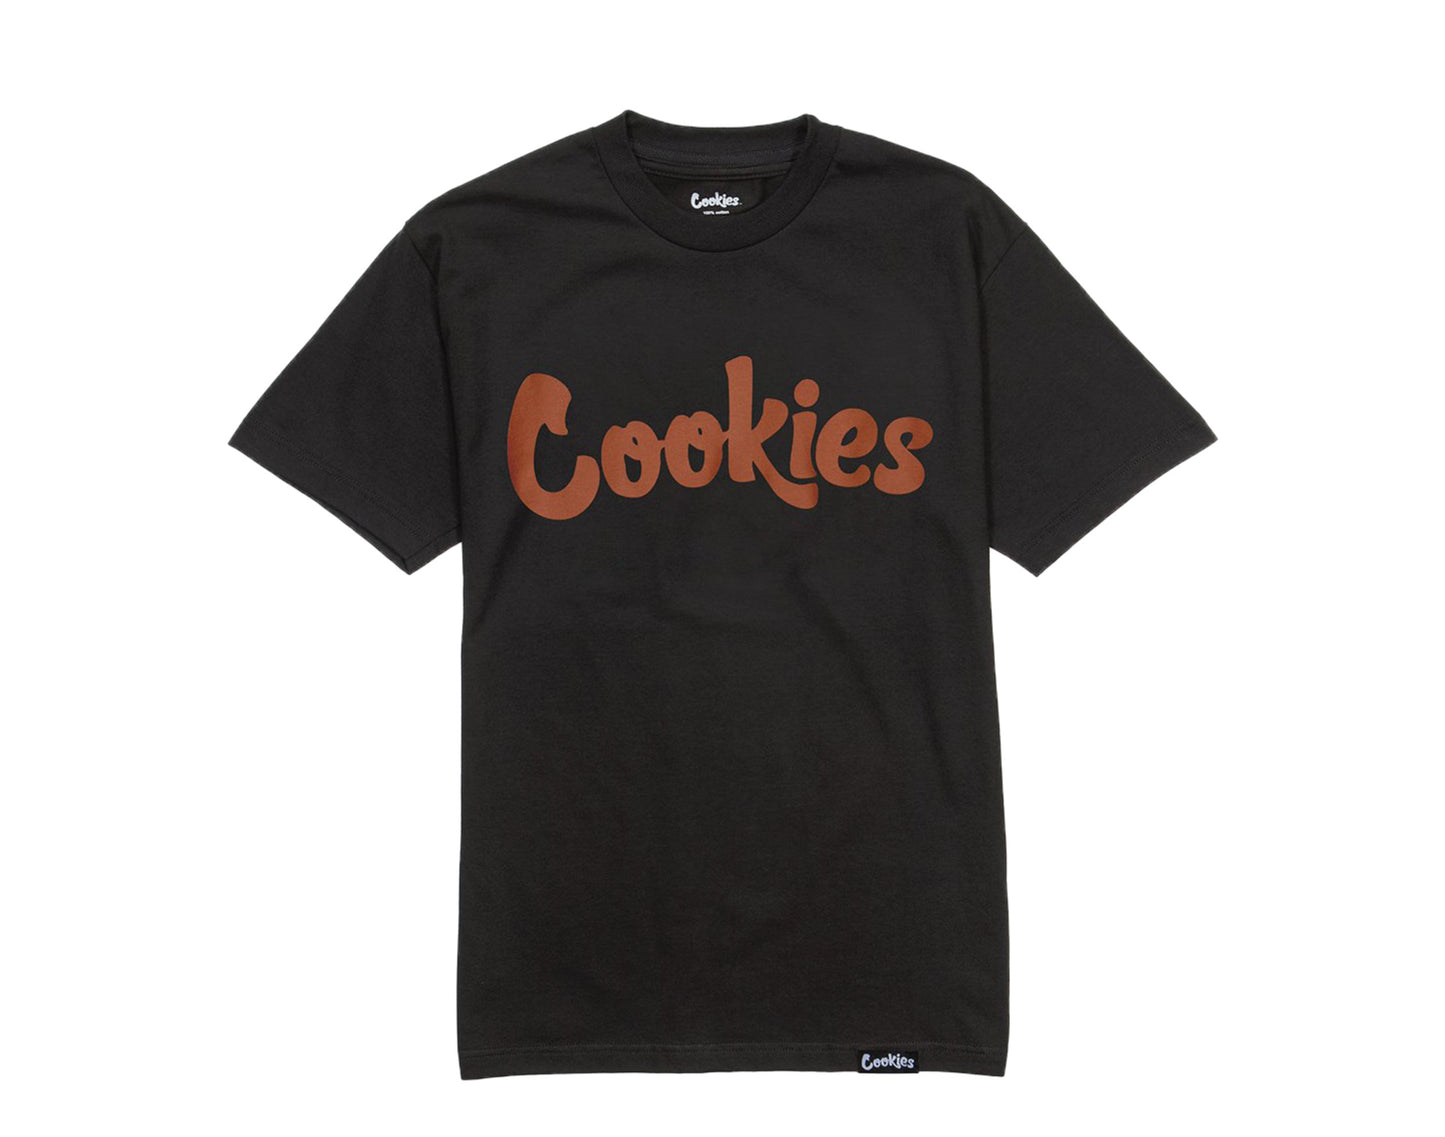 Cookies Original Mint Black/Brown Men's Tee Shirt 1546T4384-BBR